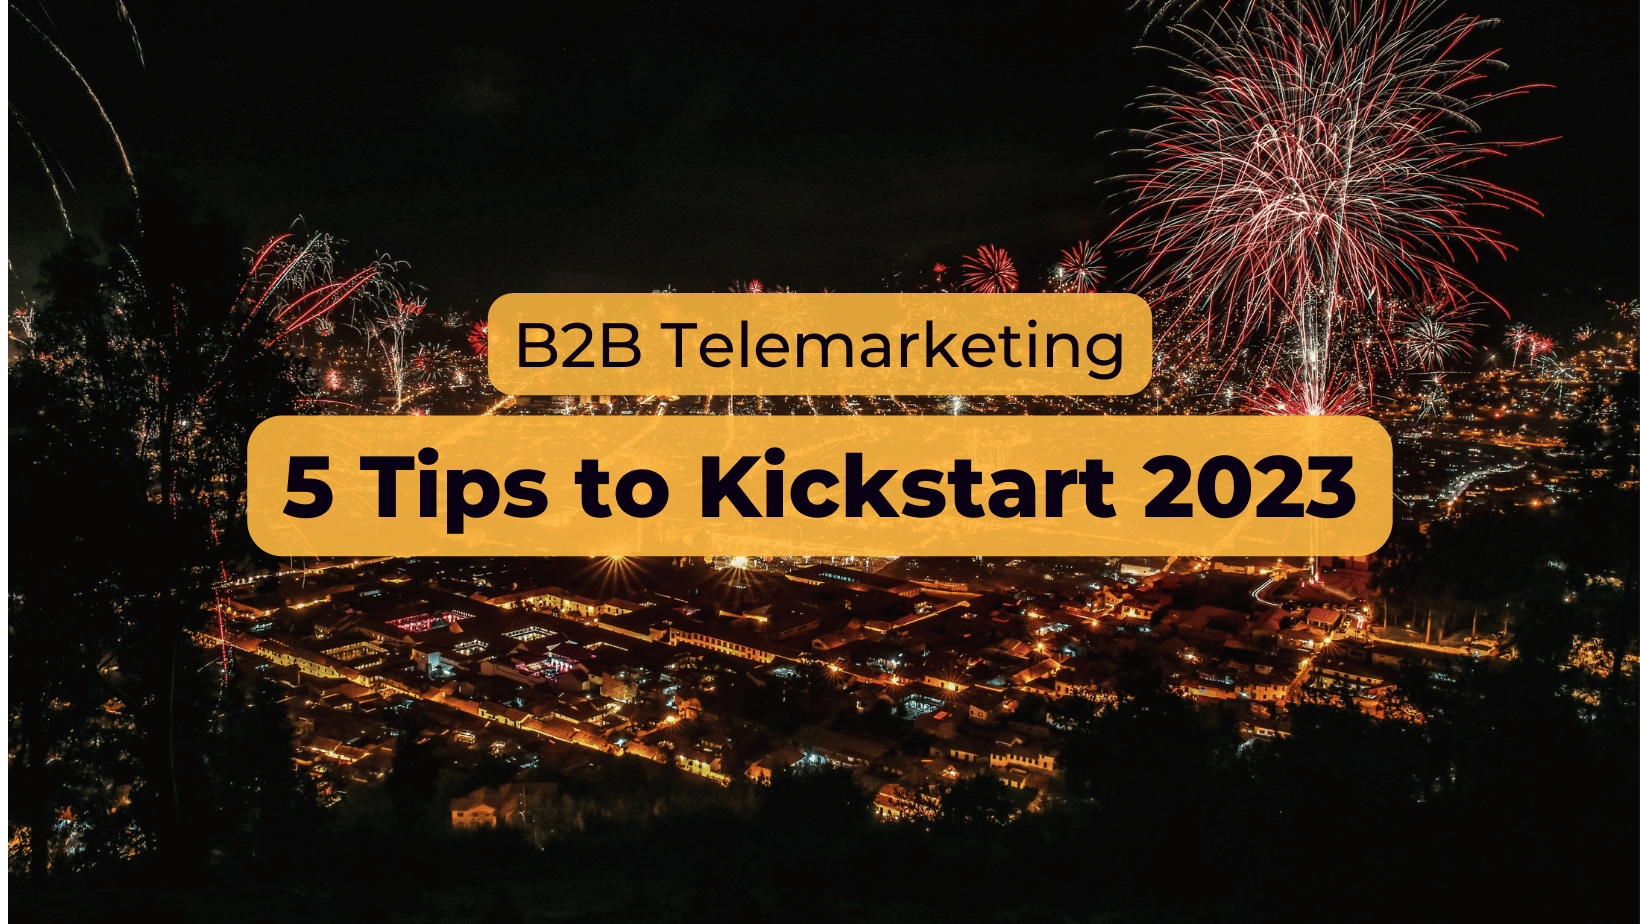 B2B Telemarketing: 5 Tips to Kickstart 2023